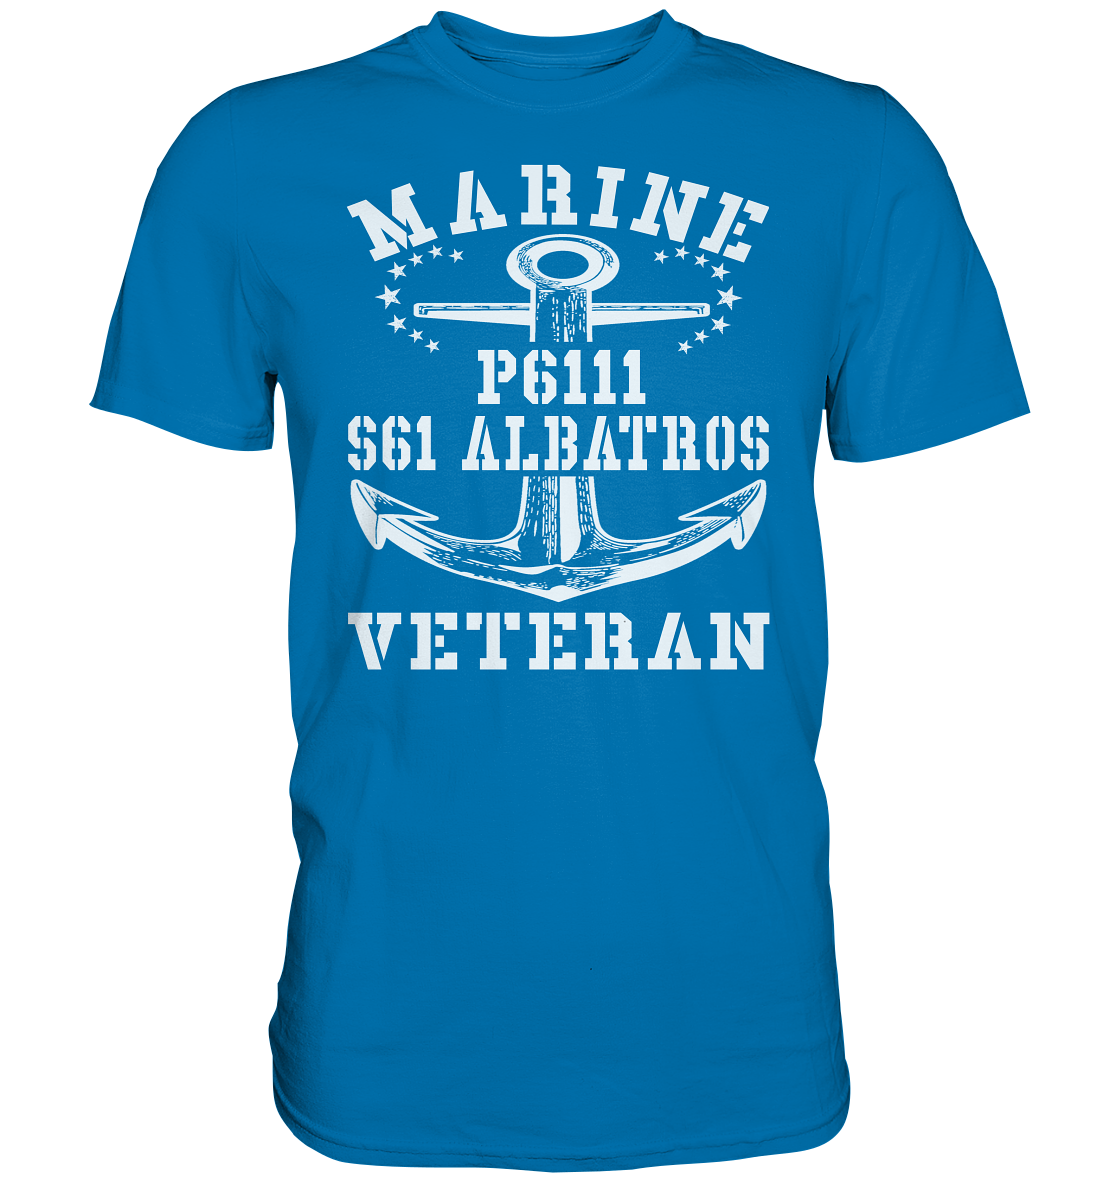 FK-Schnellboot P6111 ALBATROS Marine Veteran - Premium Shirt